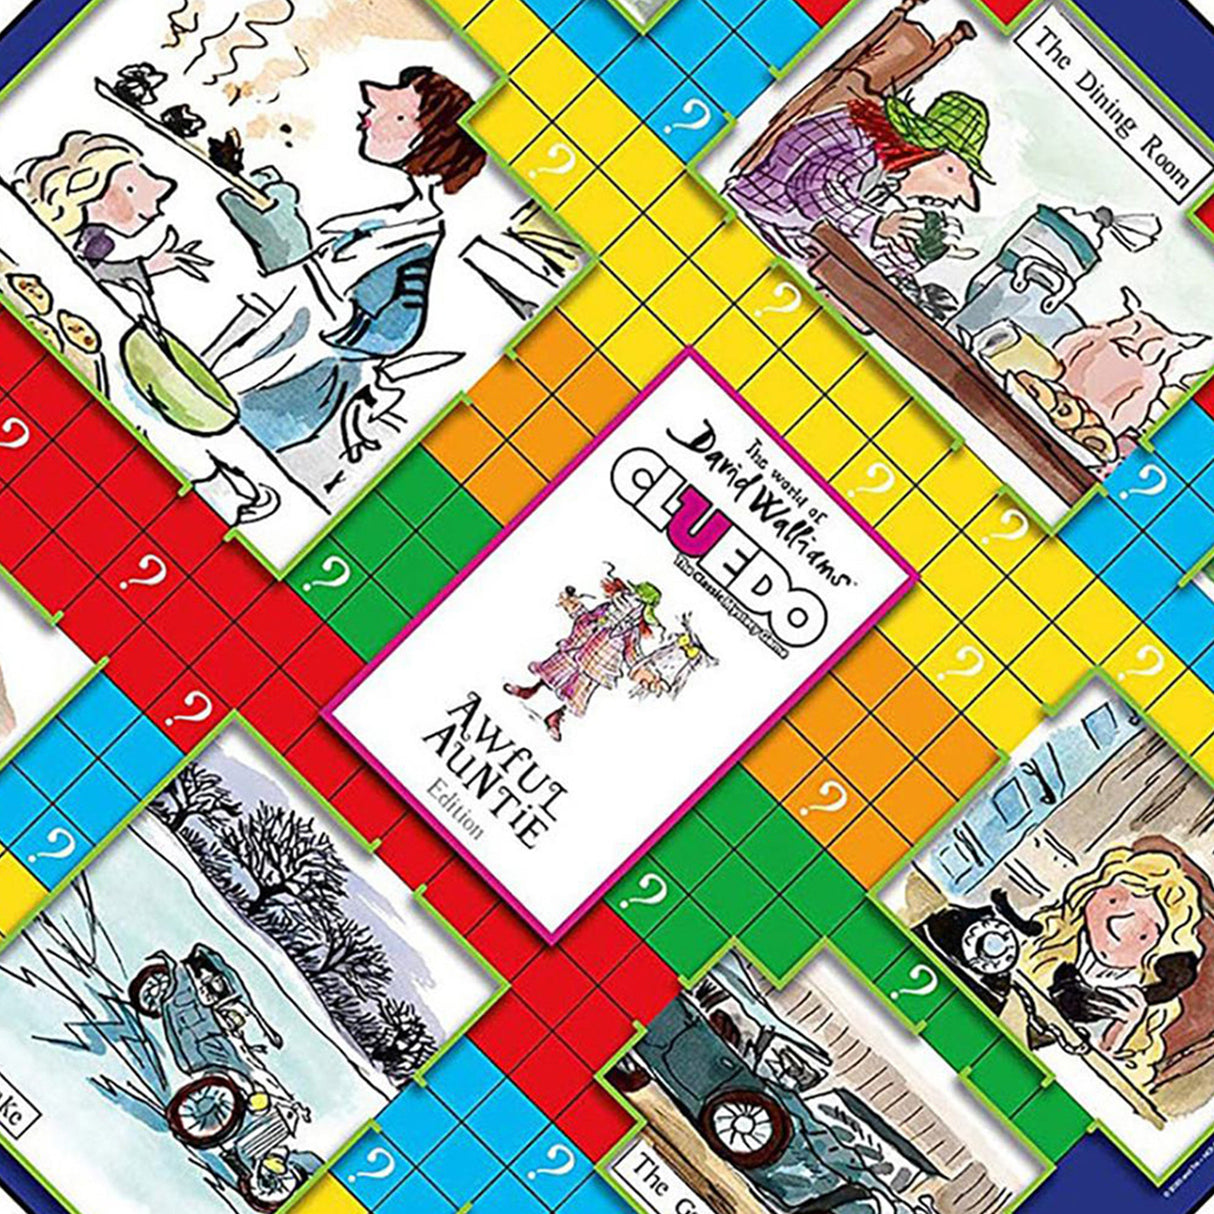 Cluedo David Walliams Awful Auntie Edition Board Game